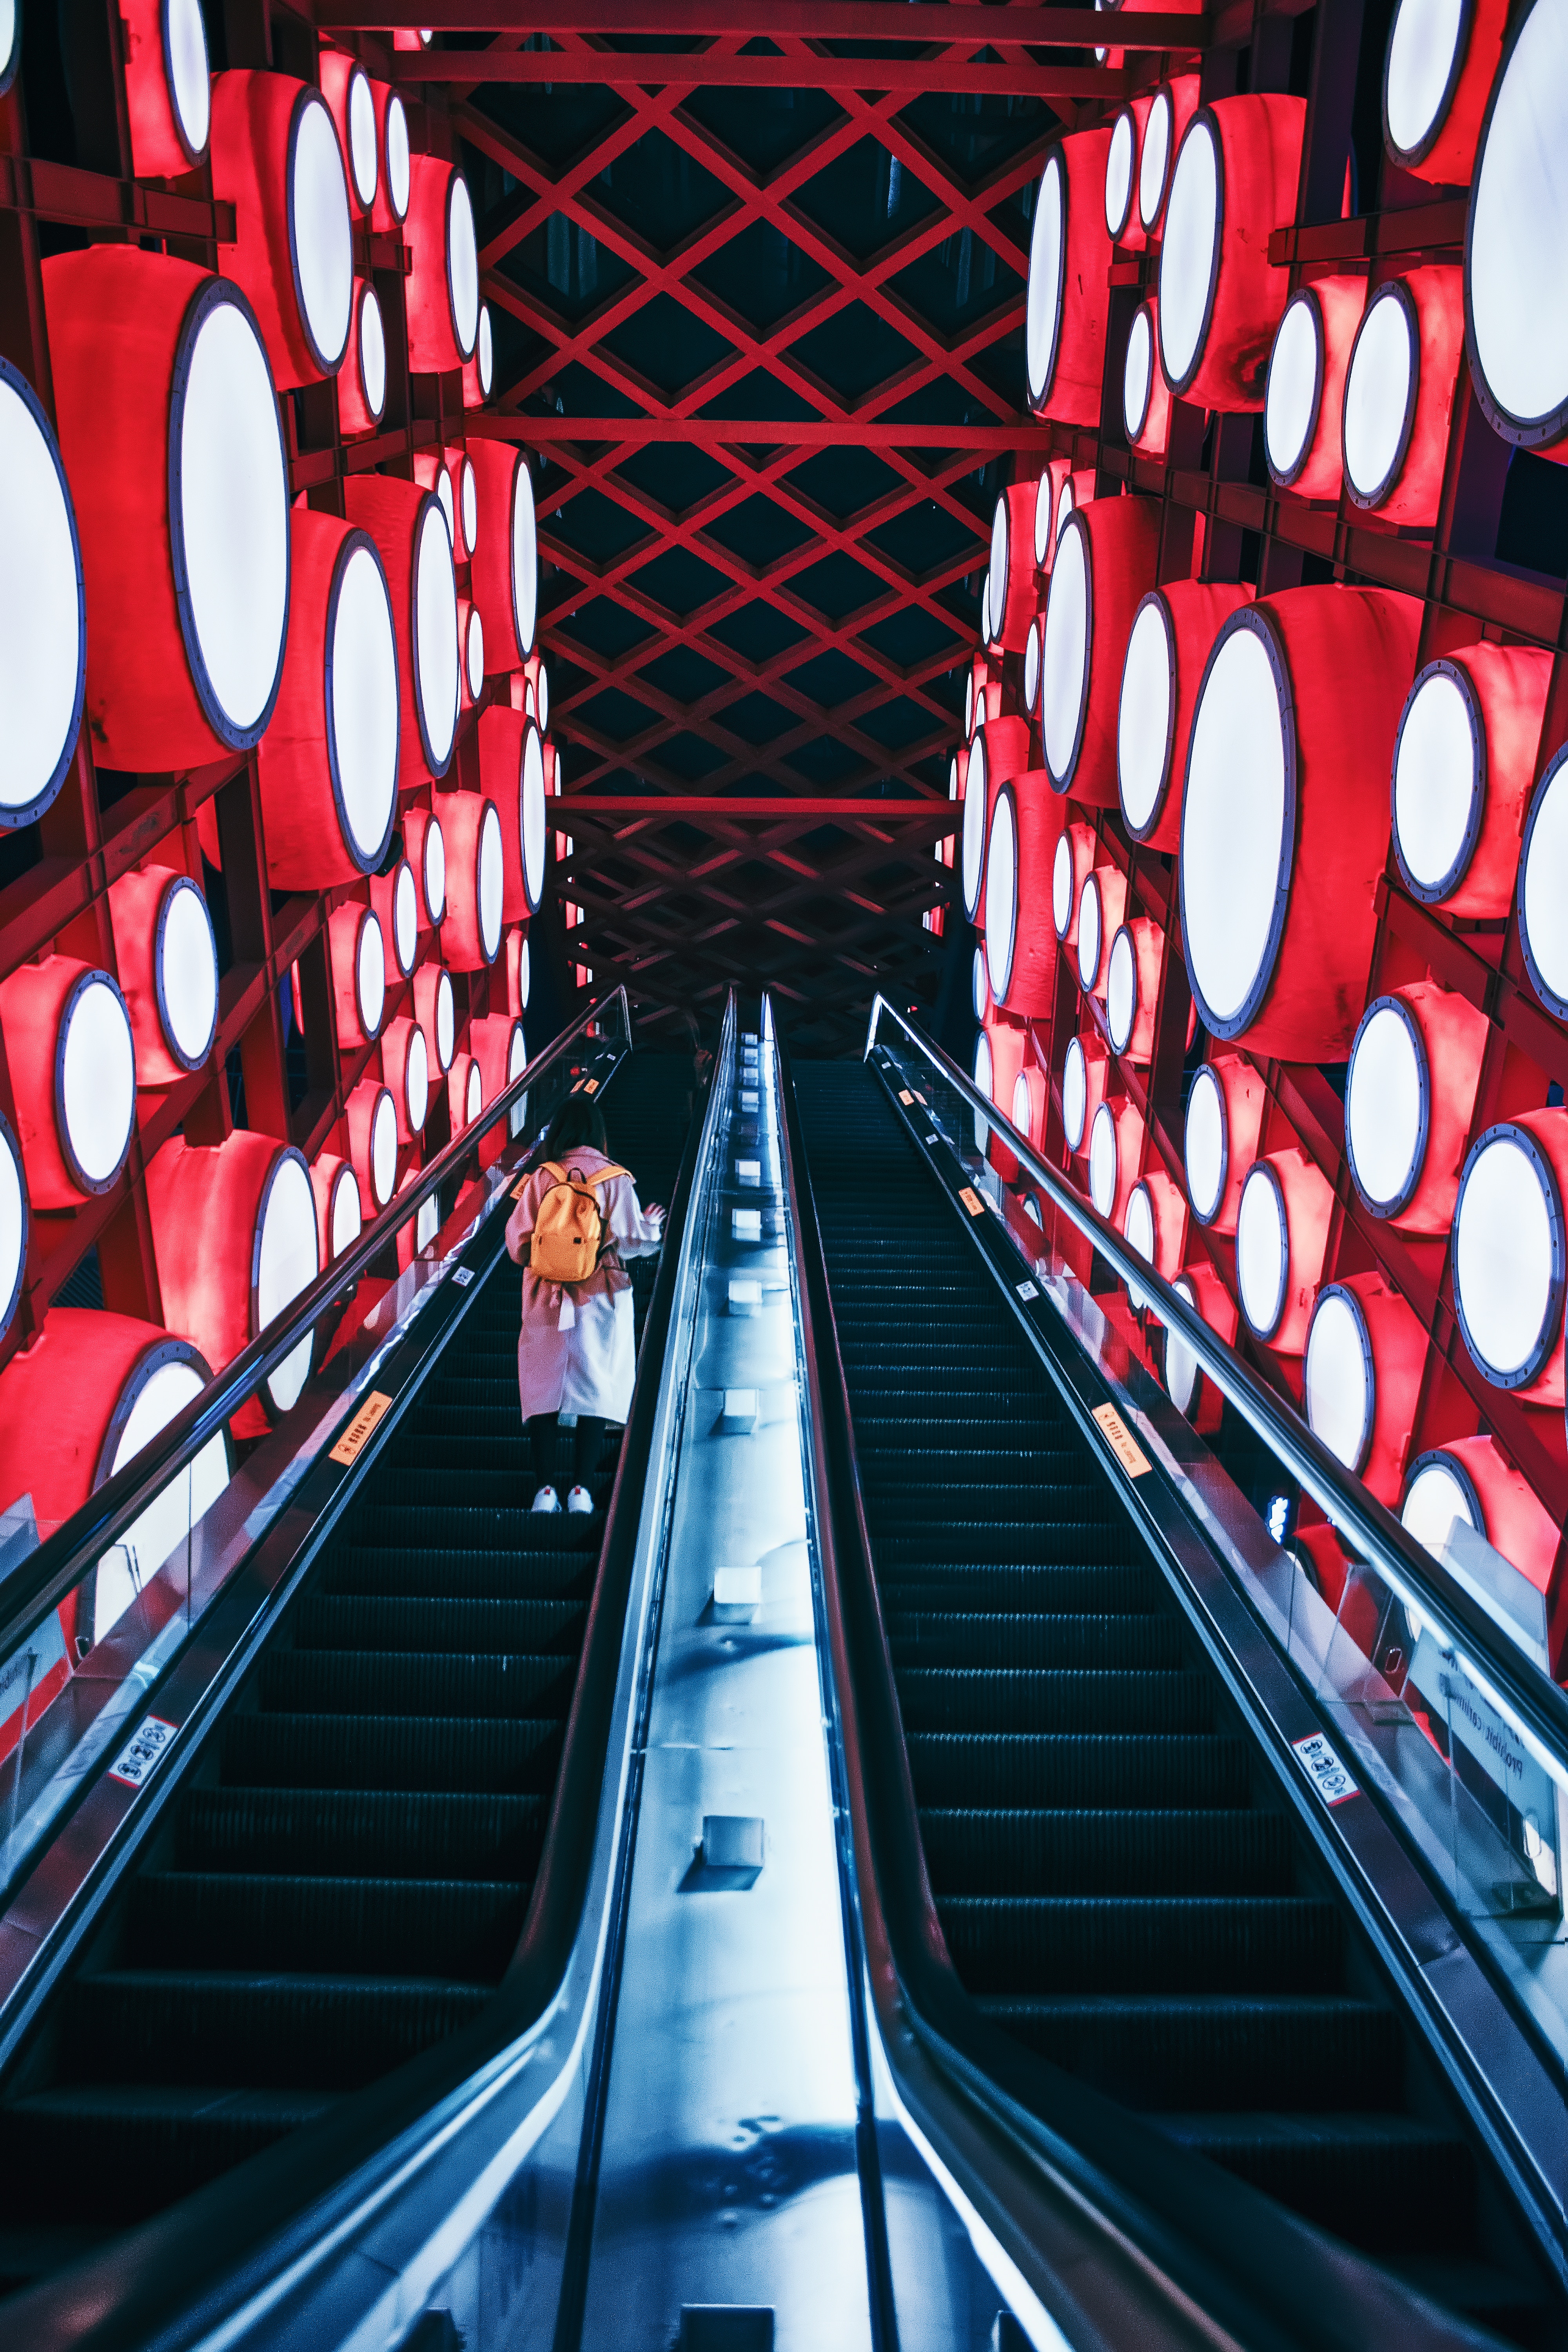 Full HD interior, red, lights, miscellanea, miscellaneous, lanterns, human, person, steps, escalator